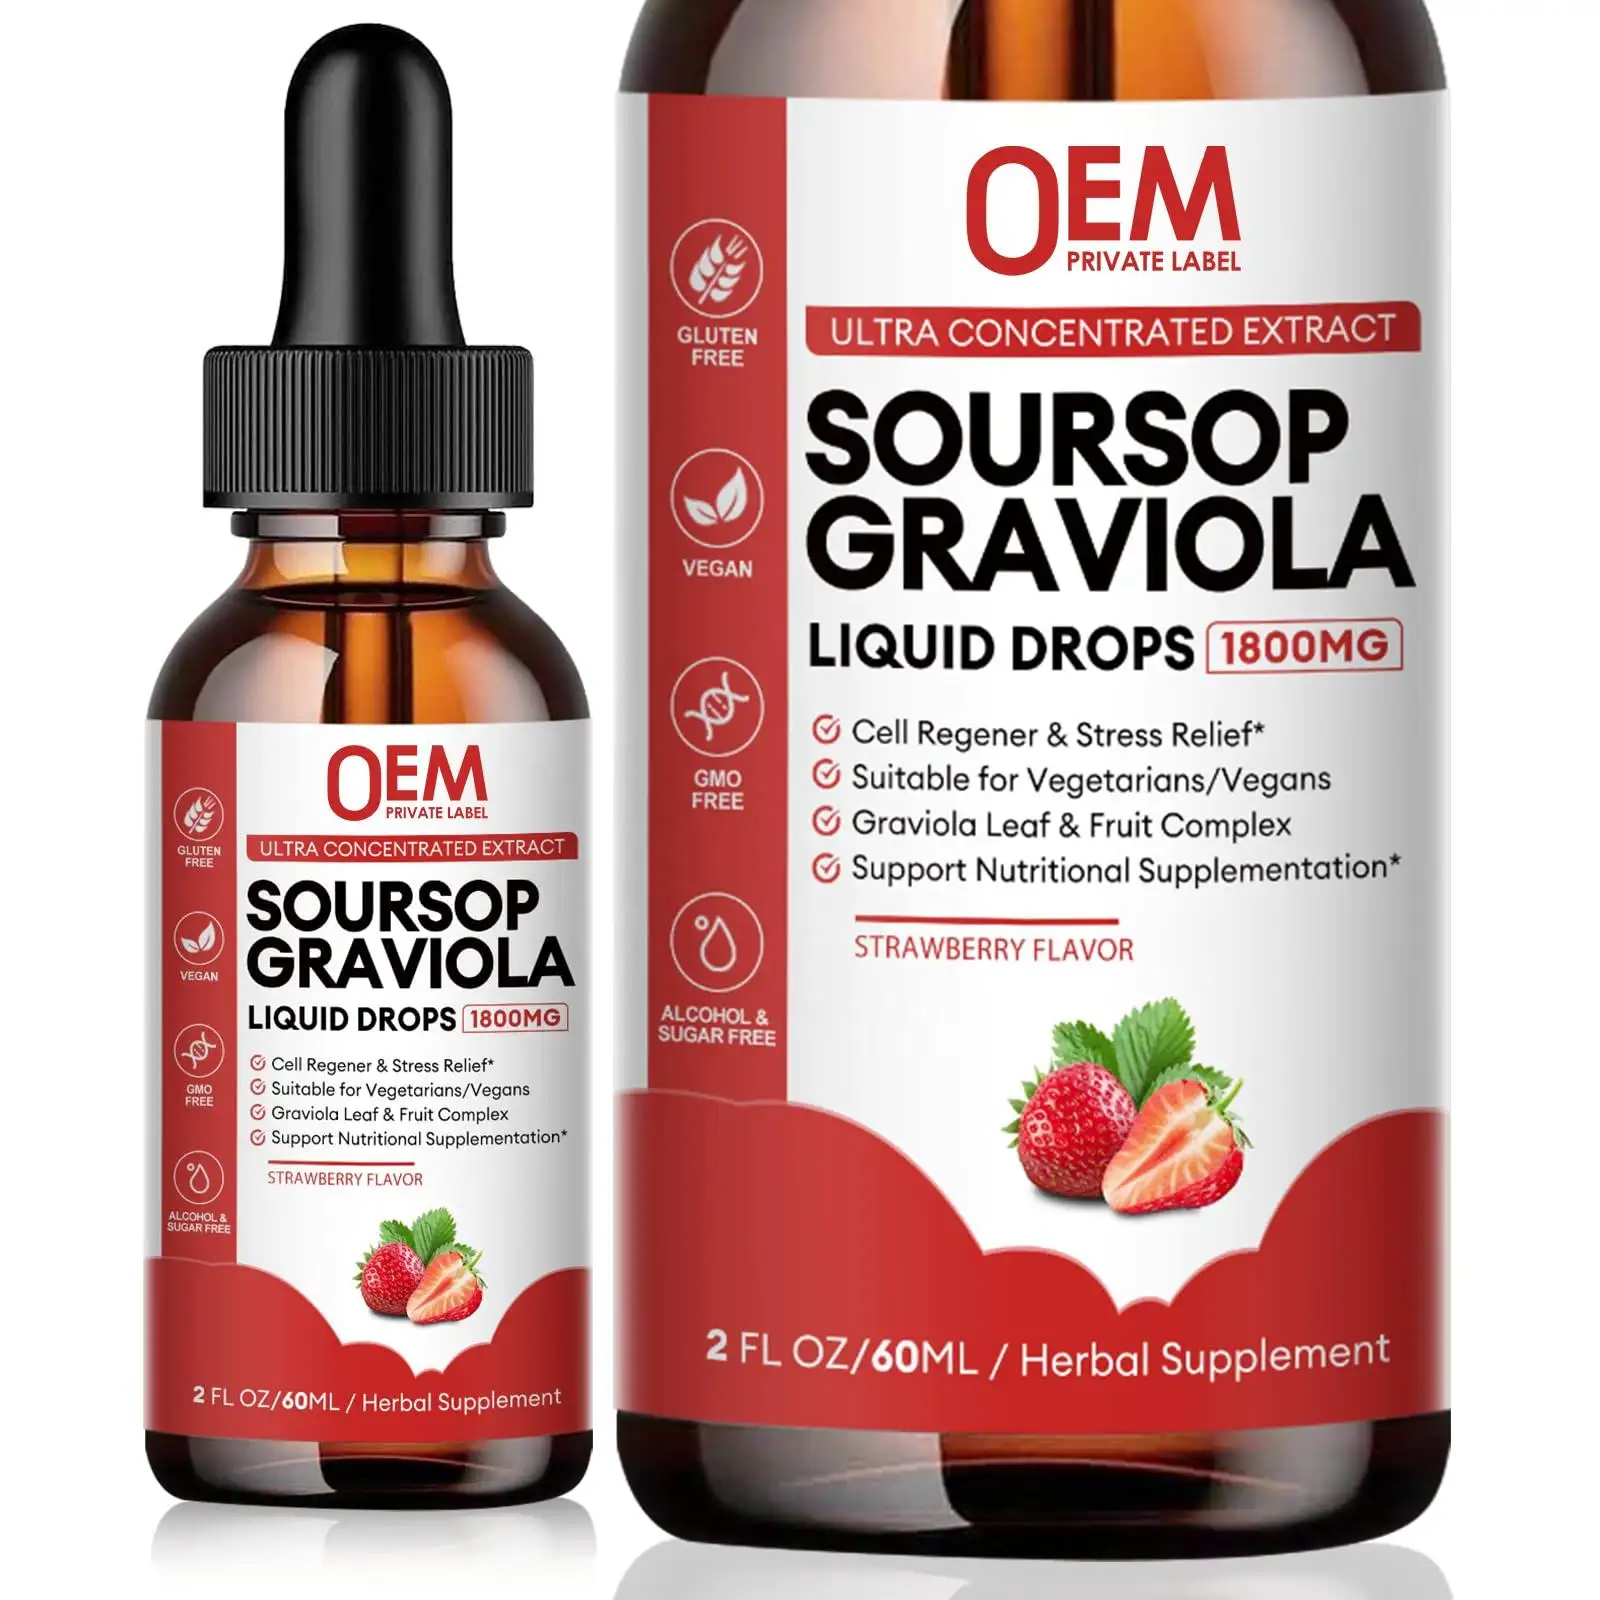 OEM Organic Soursop Graviola Leaf Extract Supplement Graviola Soursop Oil Liquid Drop for Immune Support and Digestion